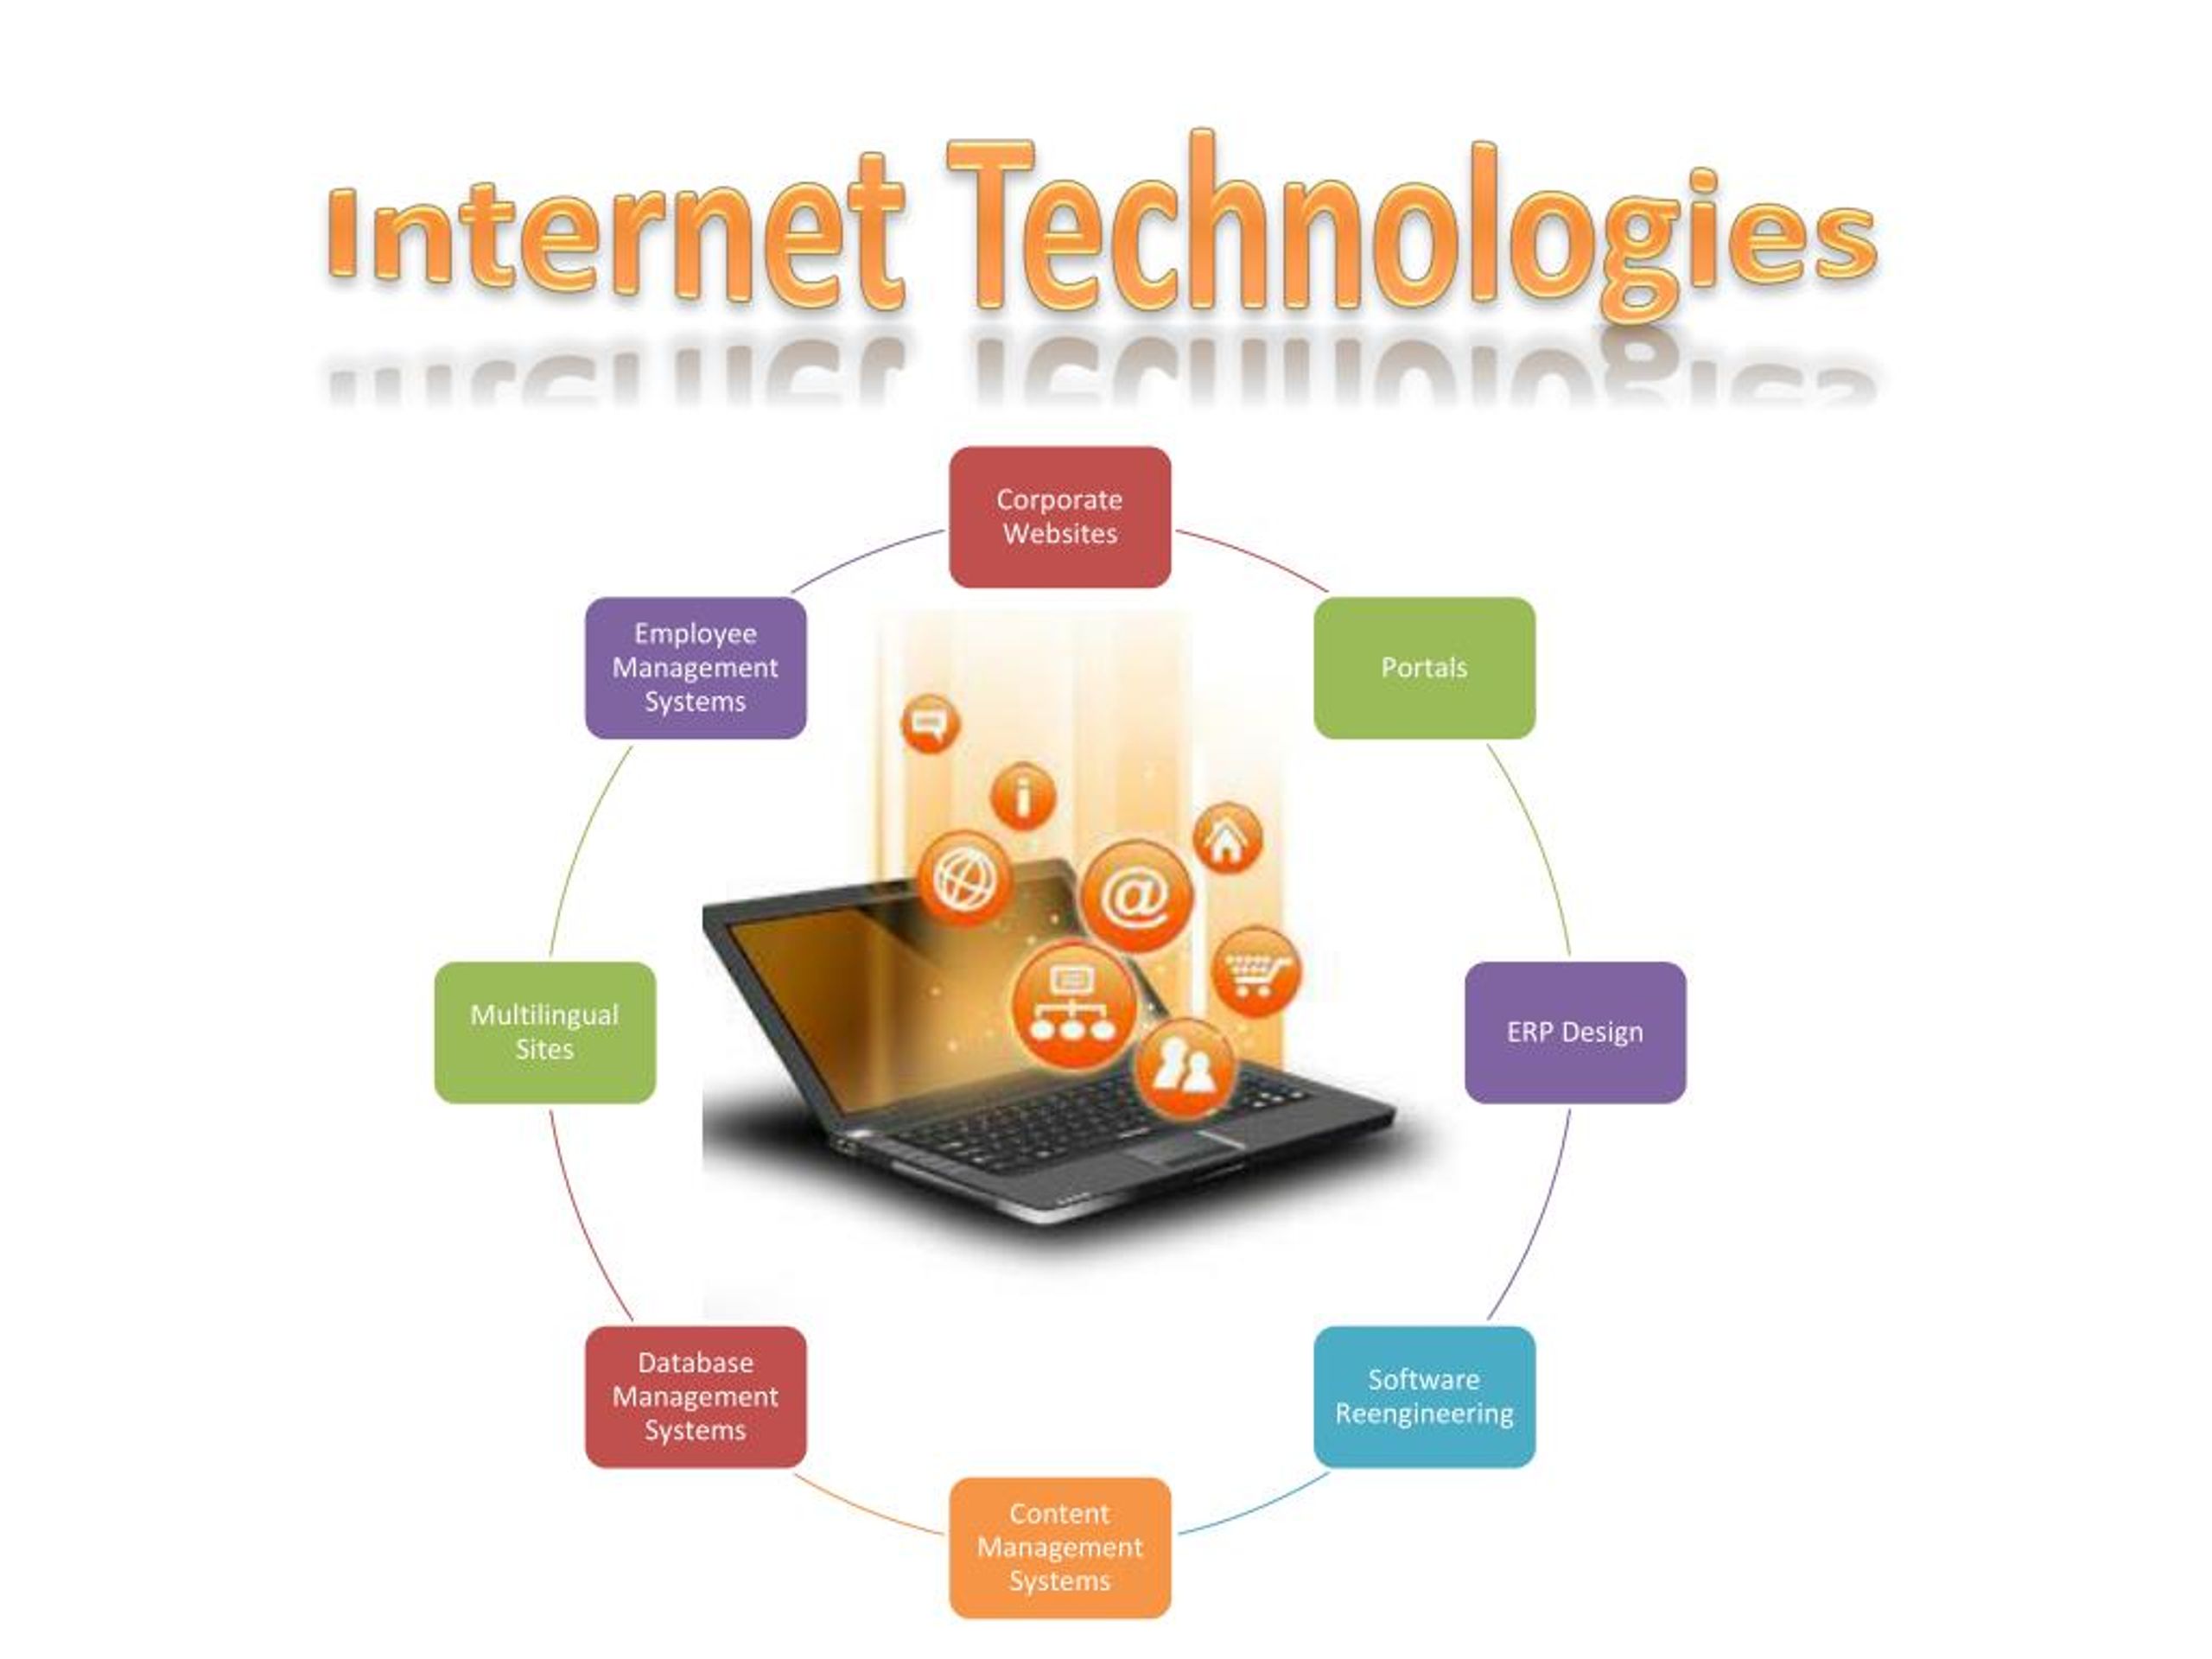 internet technologies presentation